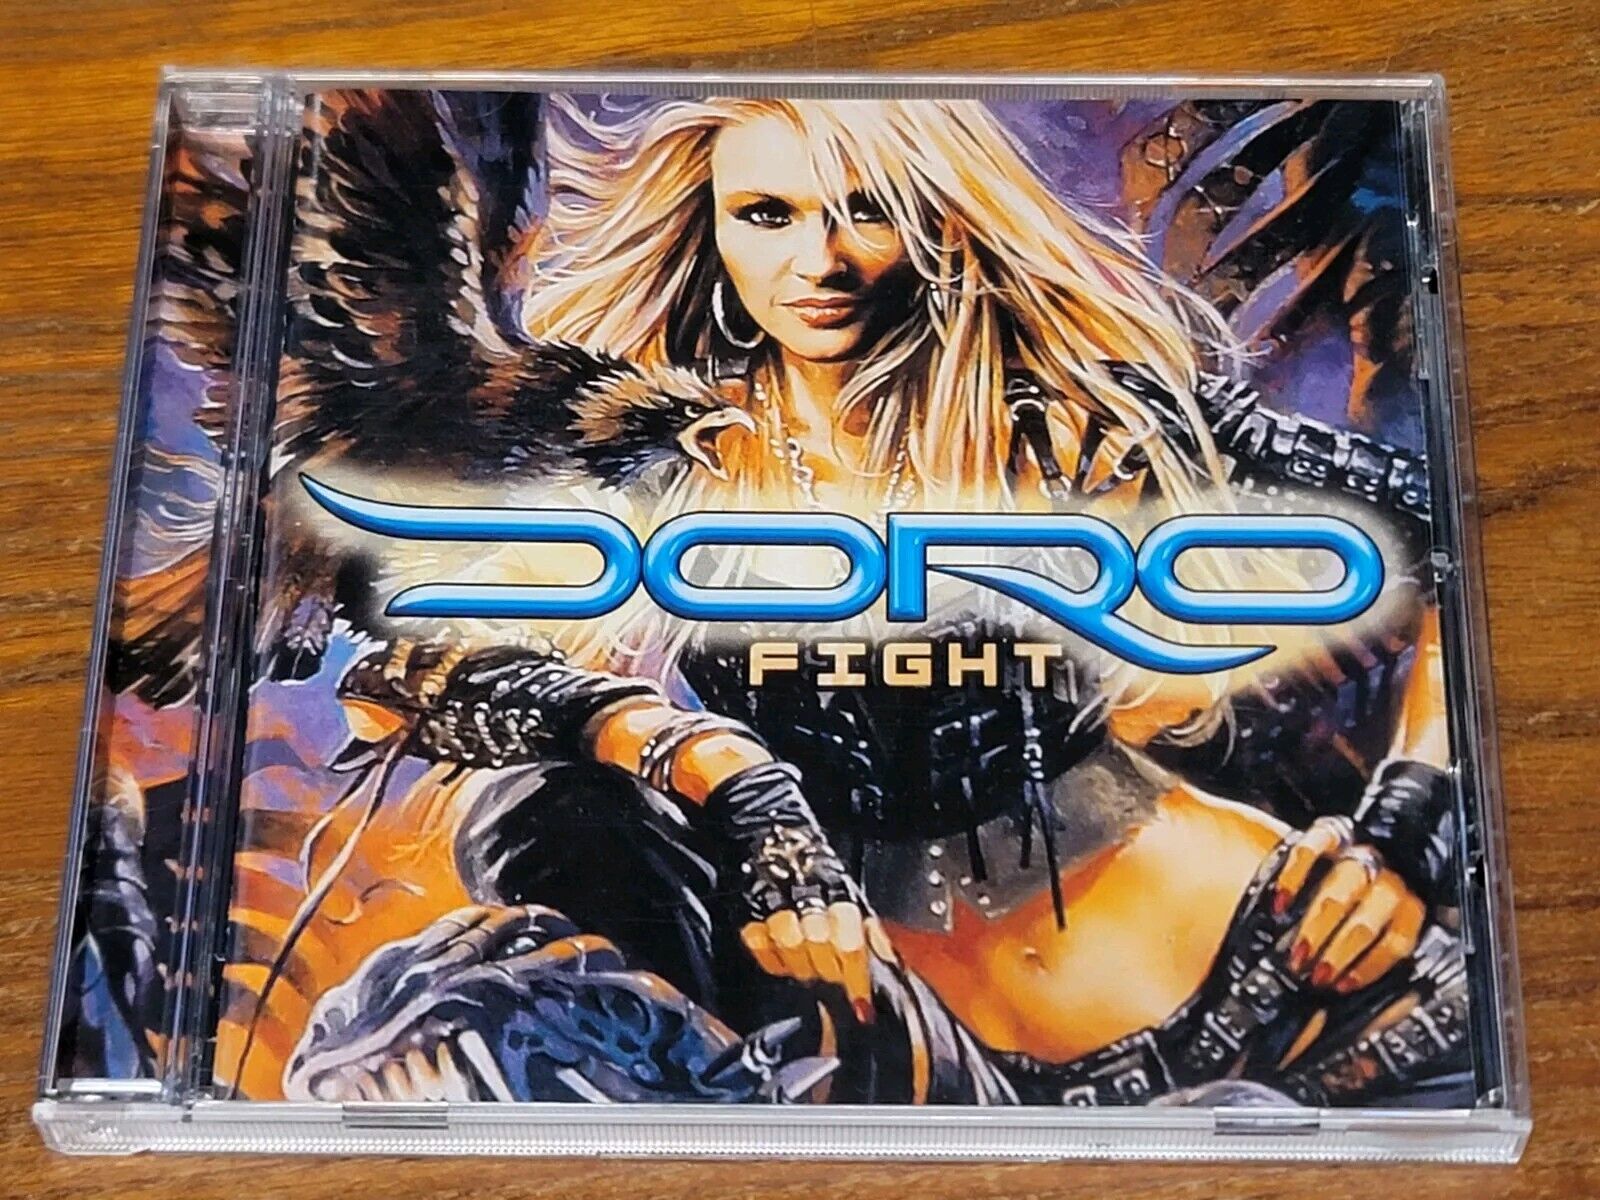 Doro : Fight CD (2002) - SPV Records